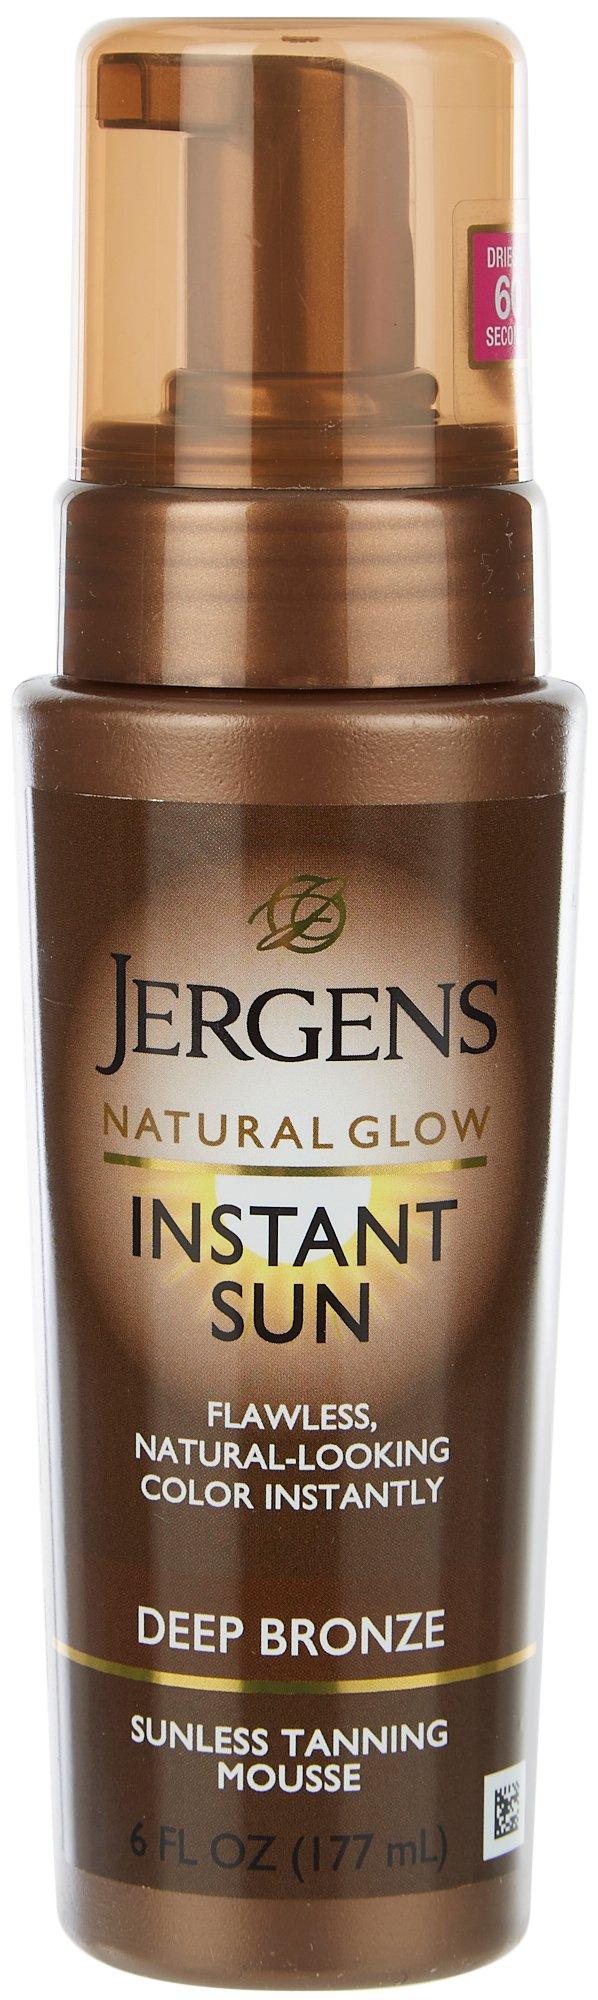 Jergens Natural Glow Deep Bronze Sunless Tanning Mousse